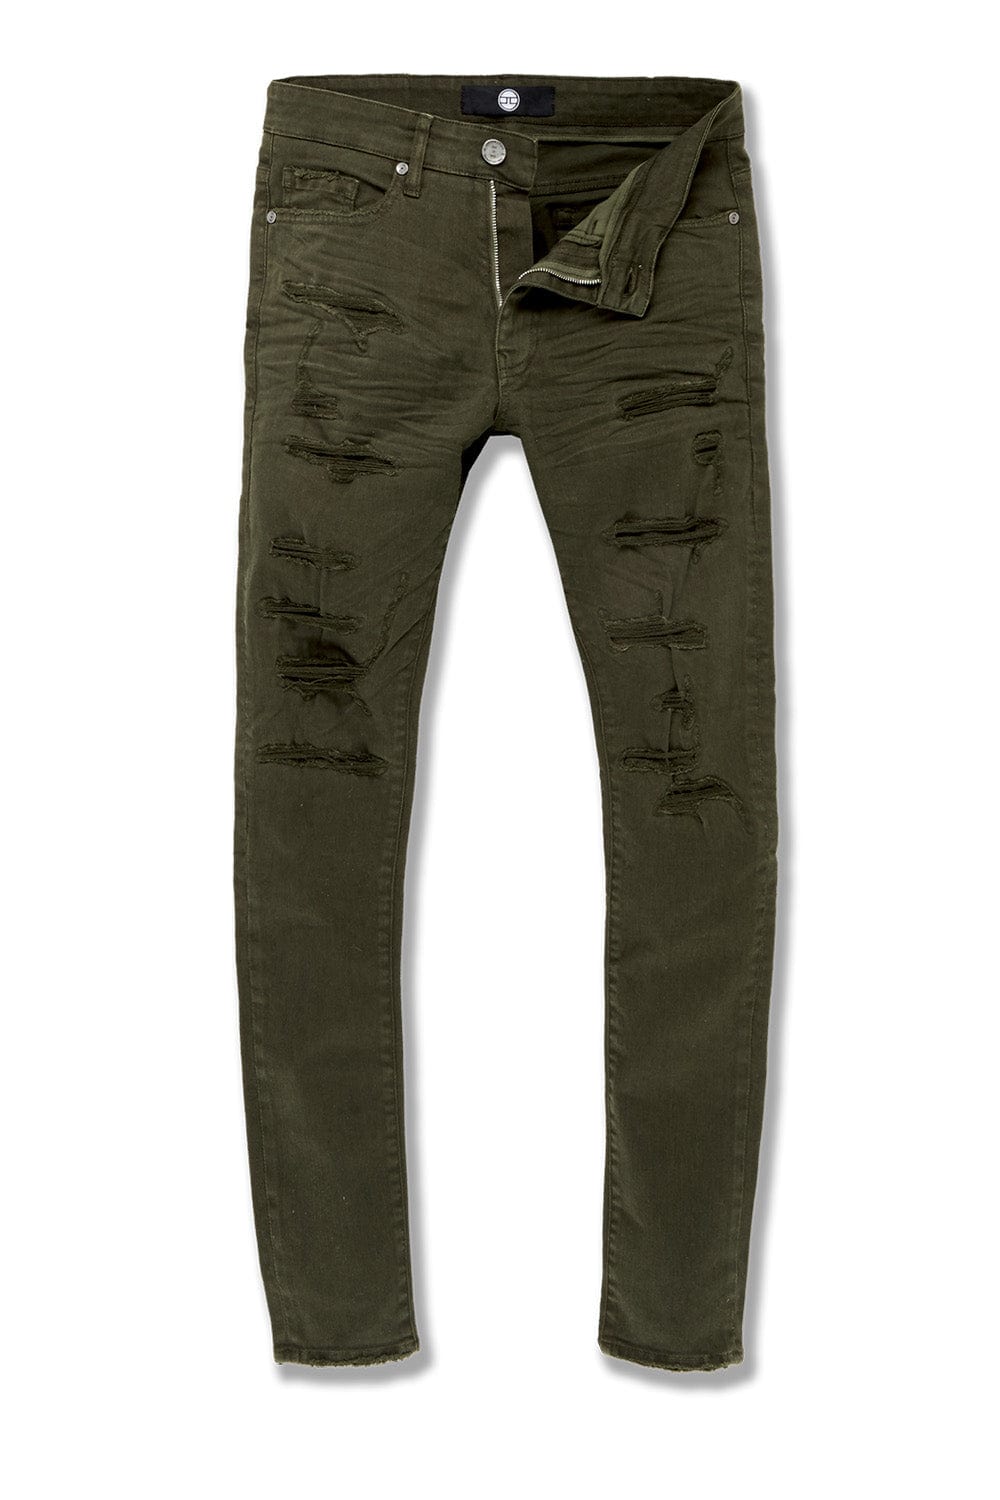 Jordan Craig Ross - Tribeca Twill Pants (Army Green) Army Green / 28/32